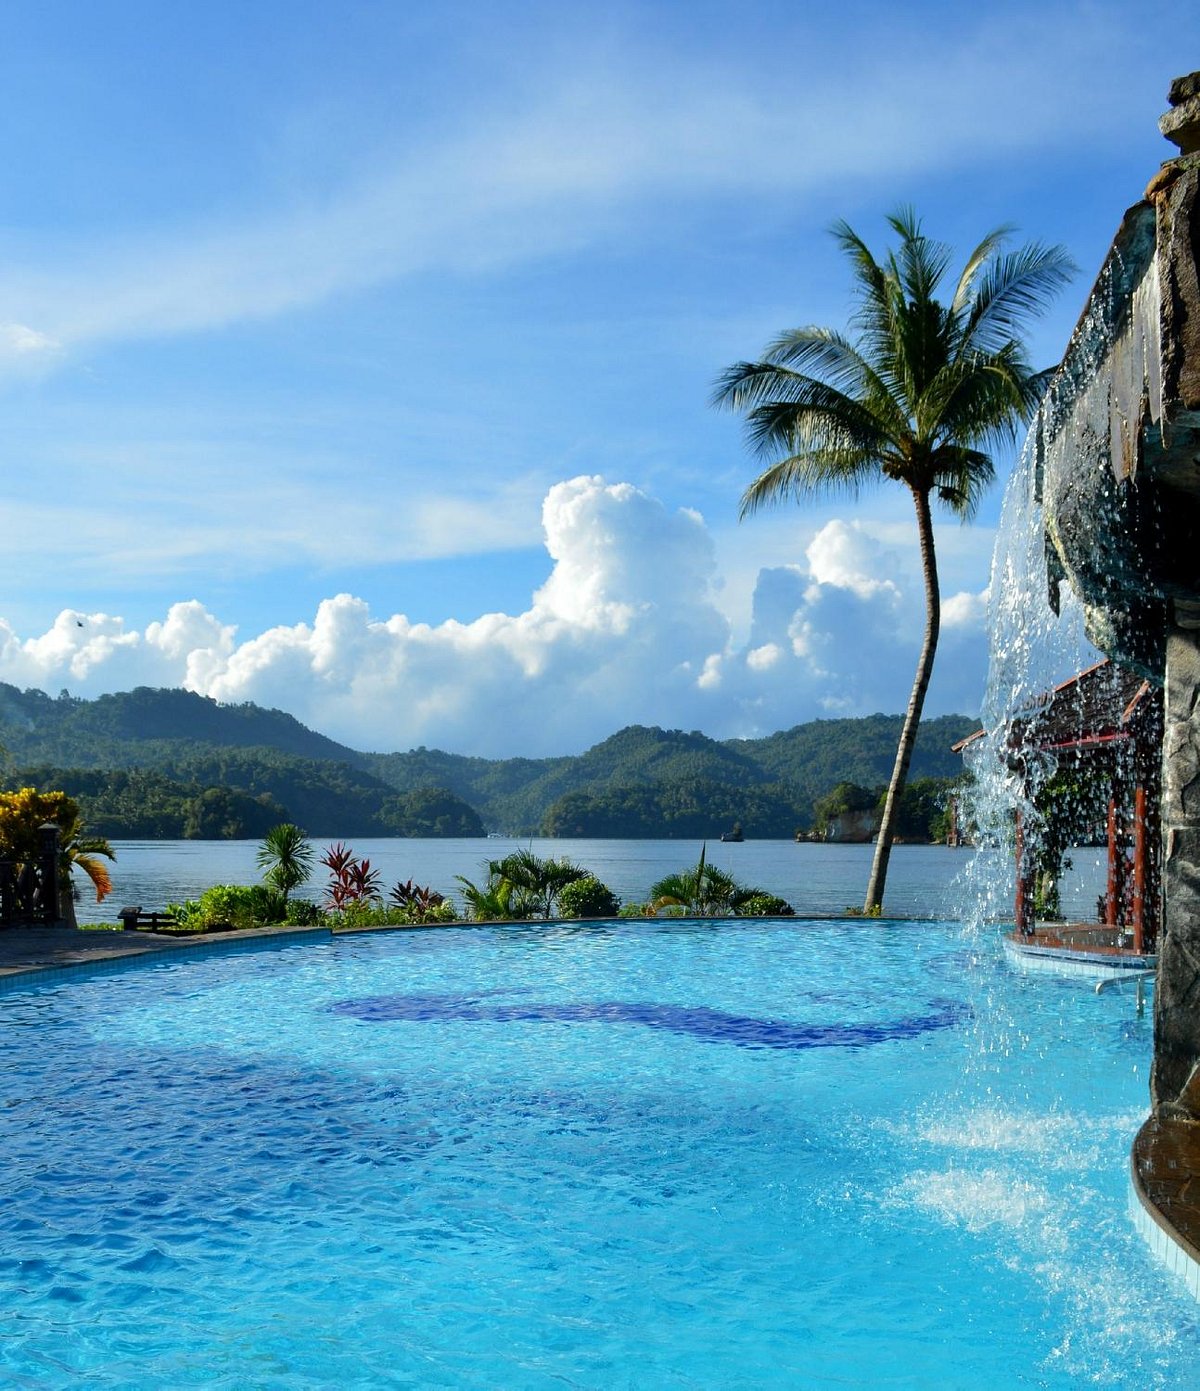 Kungkungan Bay Resort Pool Pictures & Reviews - Tripadvisor